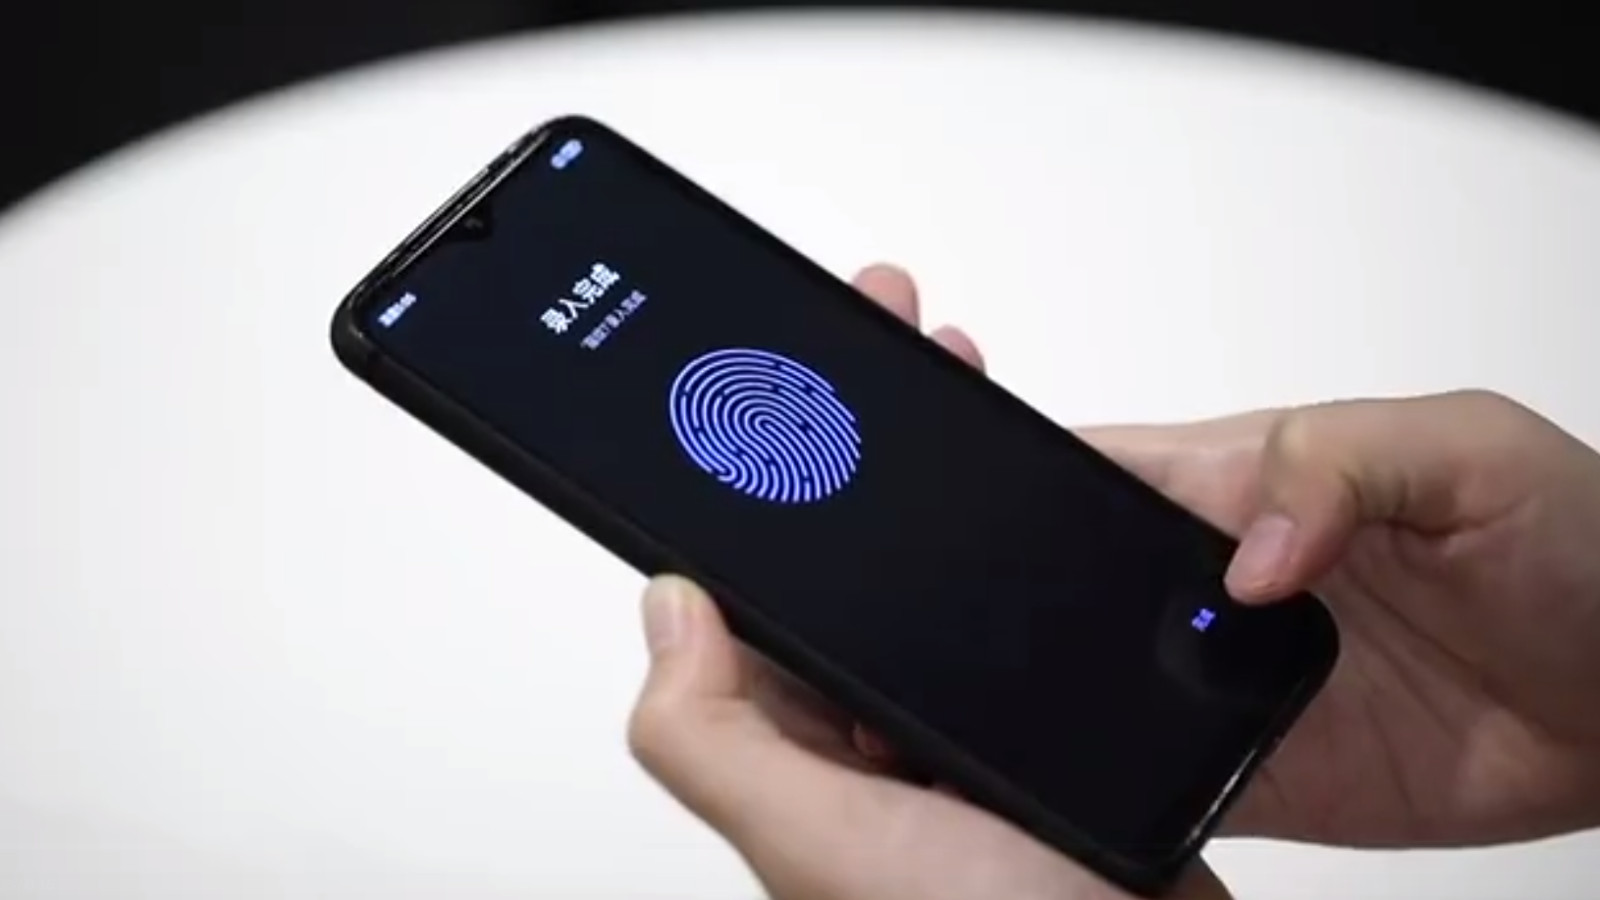 In-display fingerprint scanner on Redmi phone